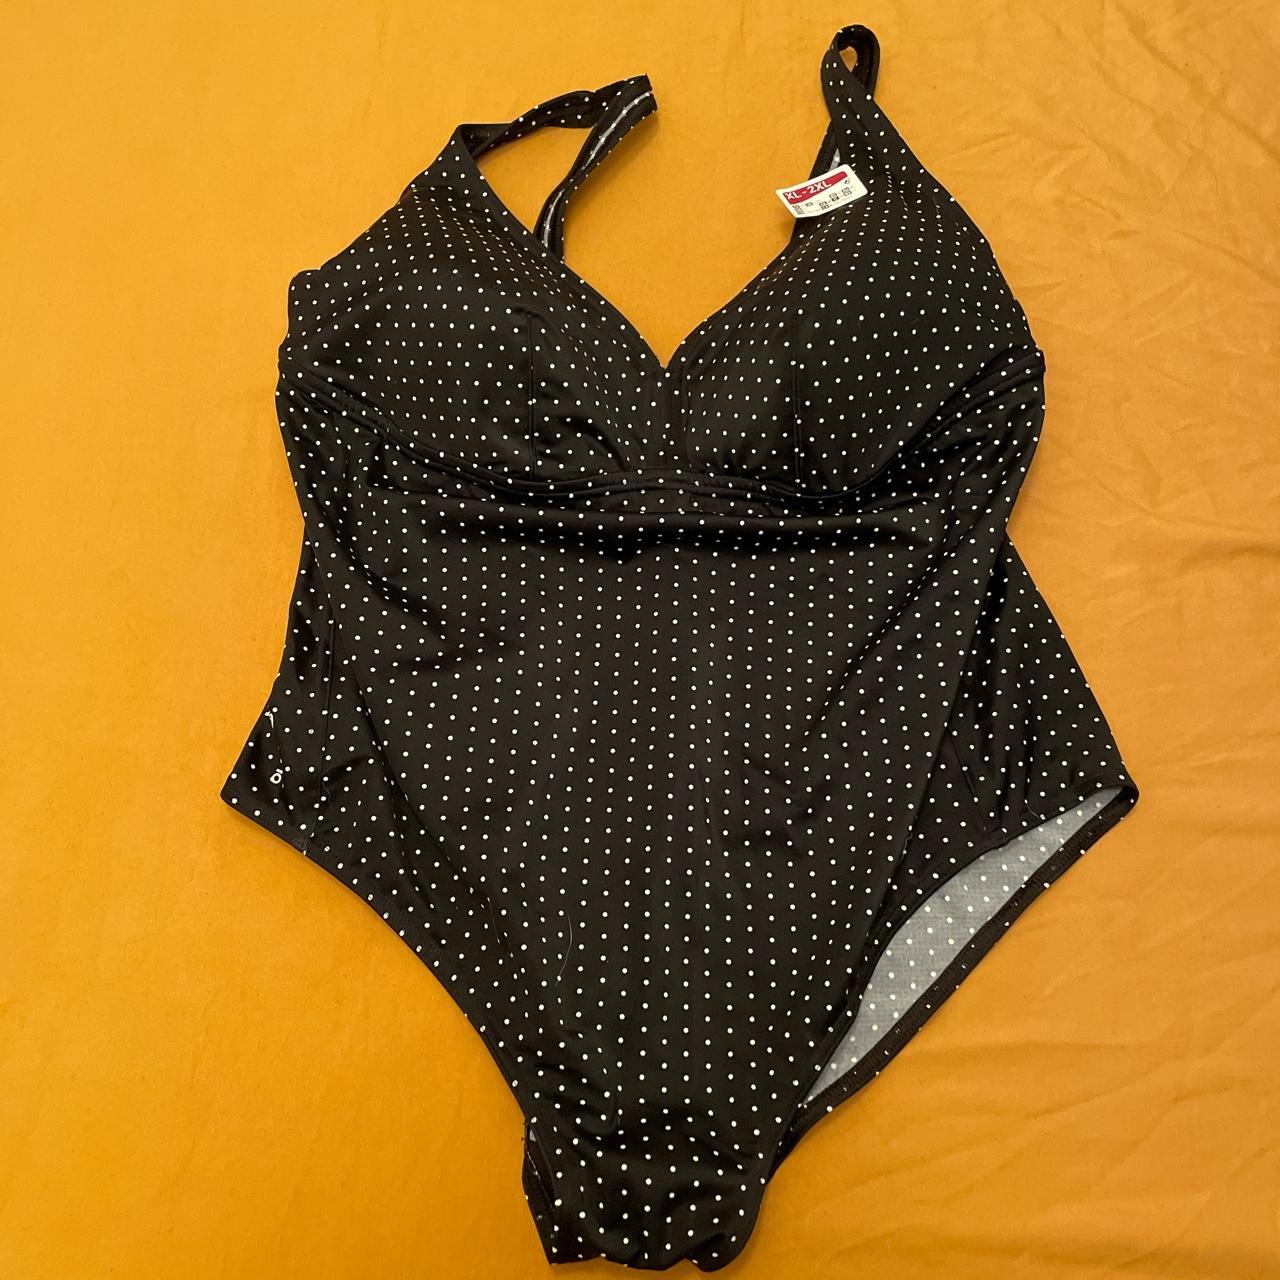 Product Image 1 - Black bathing suit with white